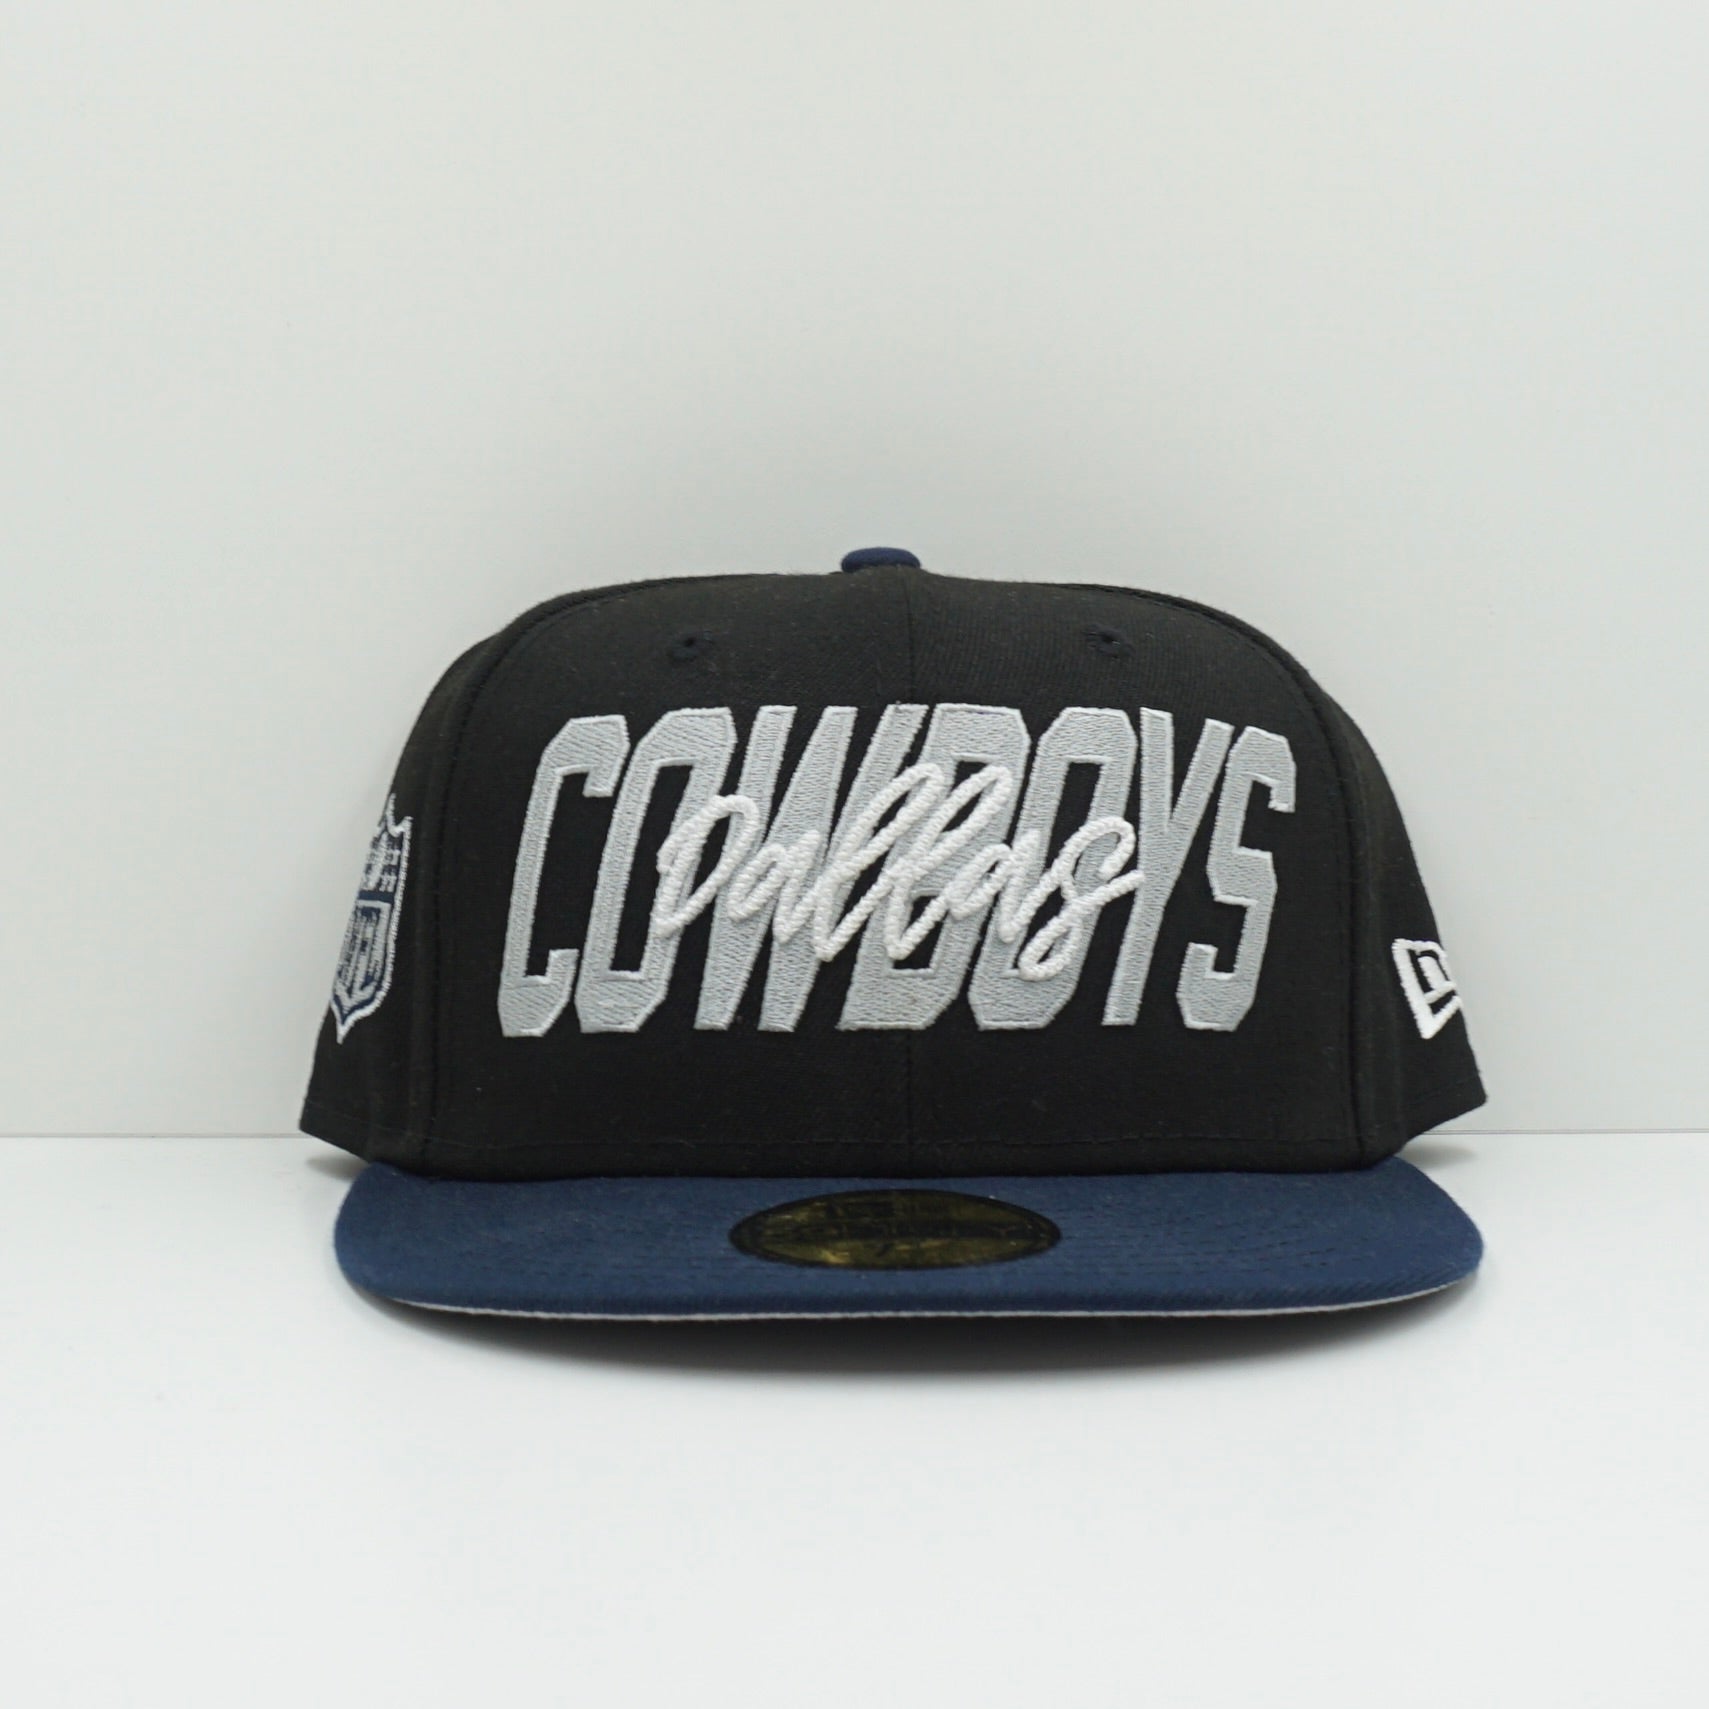 New Era Dallas Cowboys Black/Navy Fitted Cap